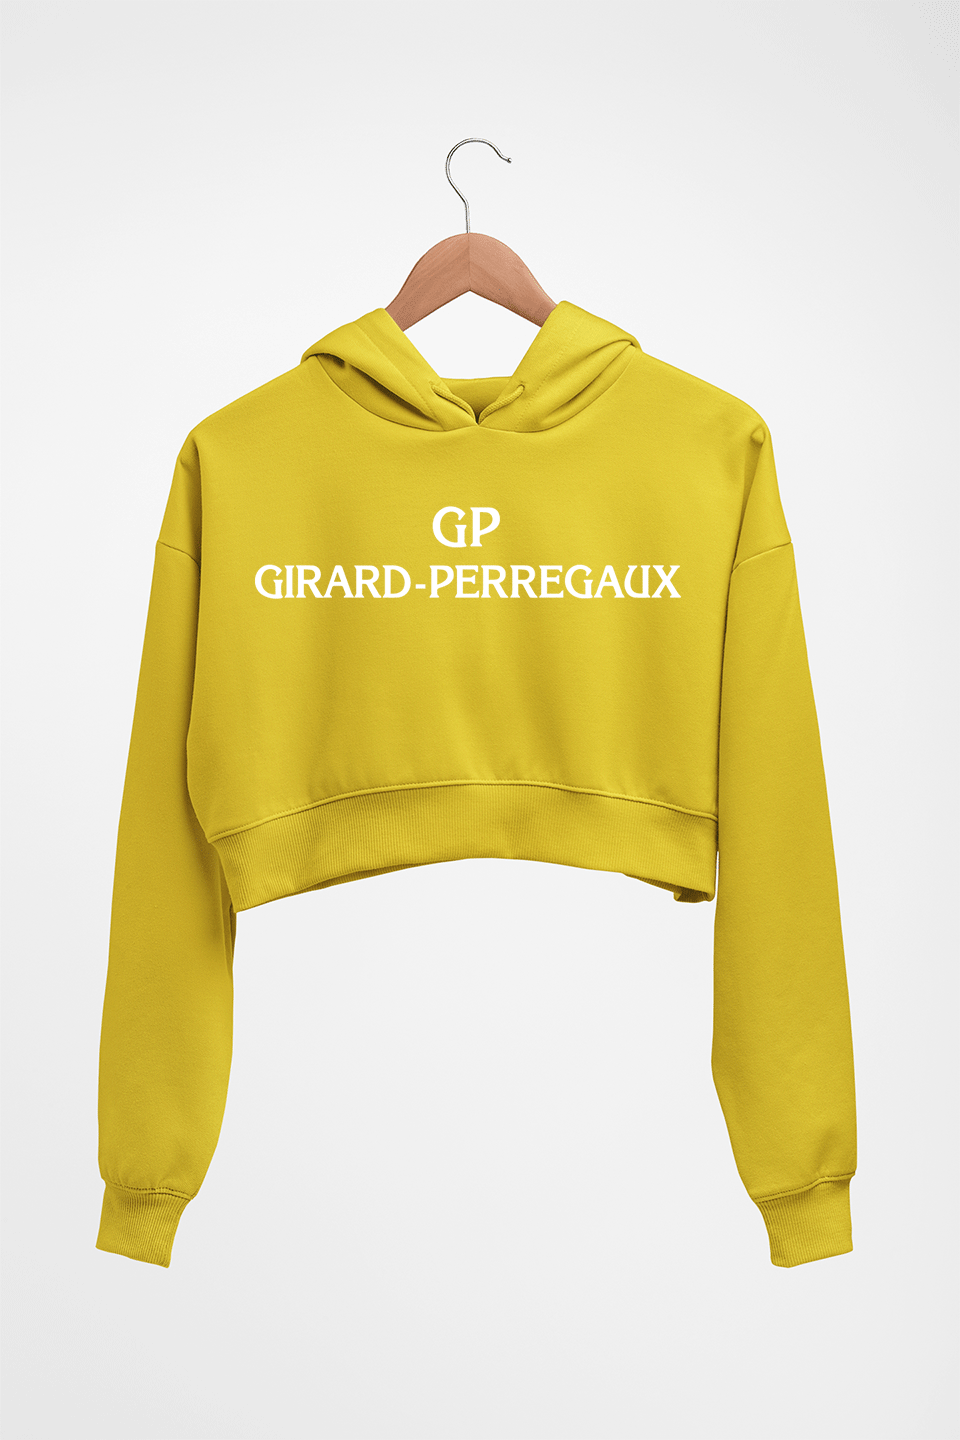 Girard-Perregaux(GP) Crop HOODIE FOR WOMEN